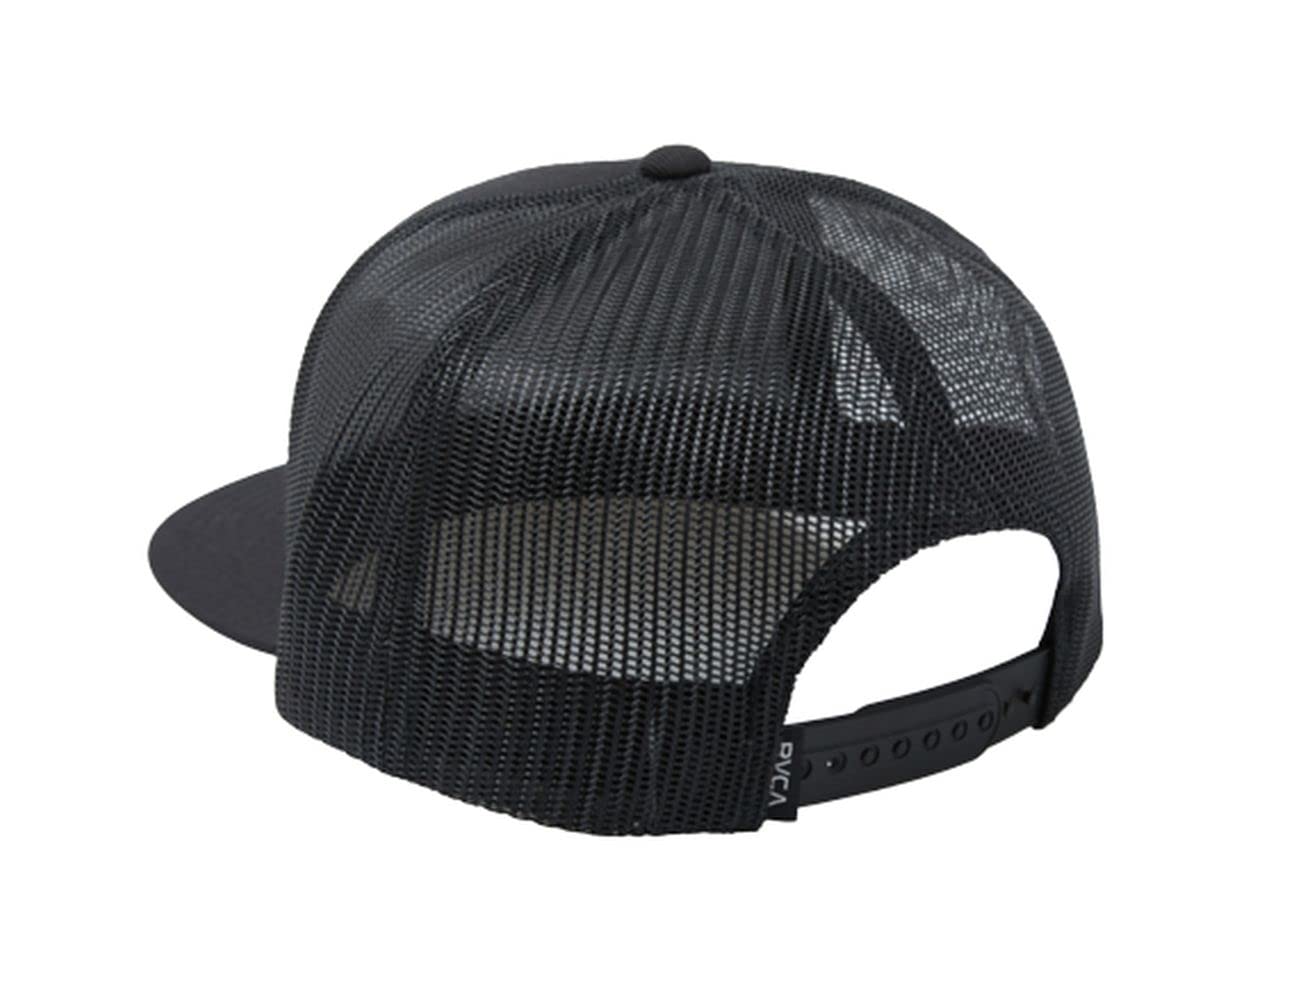 RVCA Men's Adjustable Snapback Trucker Hat